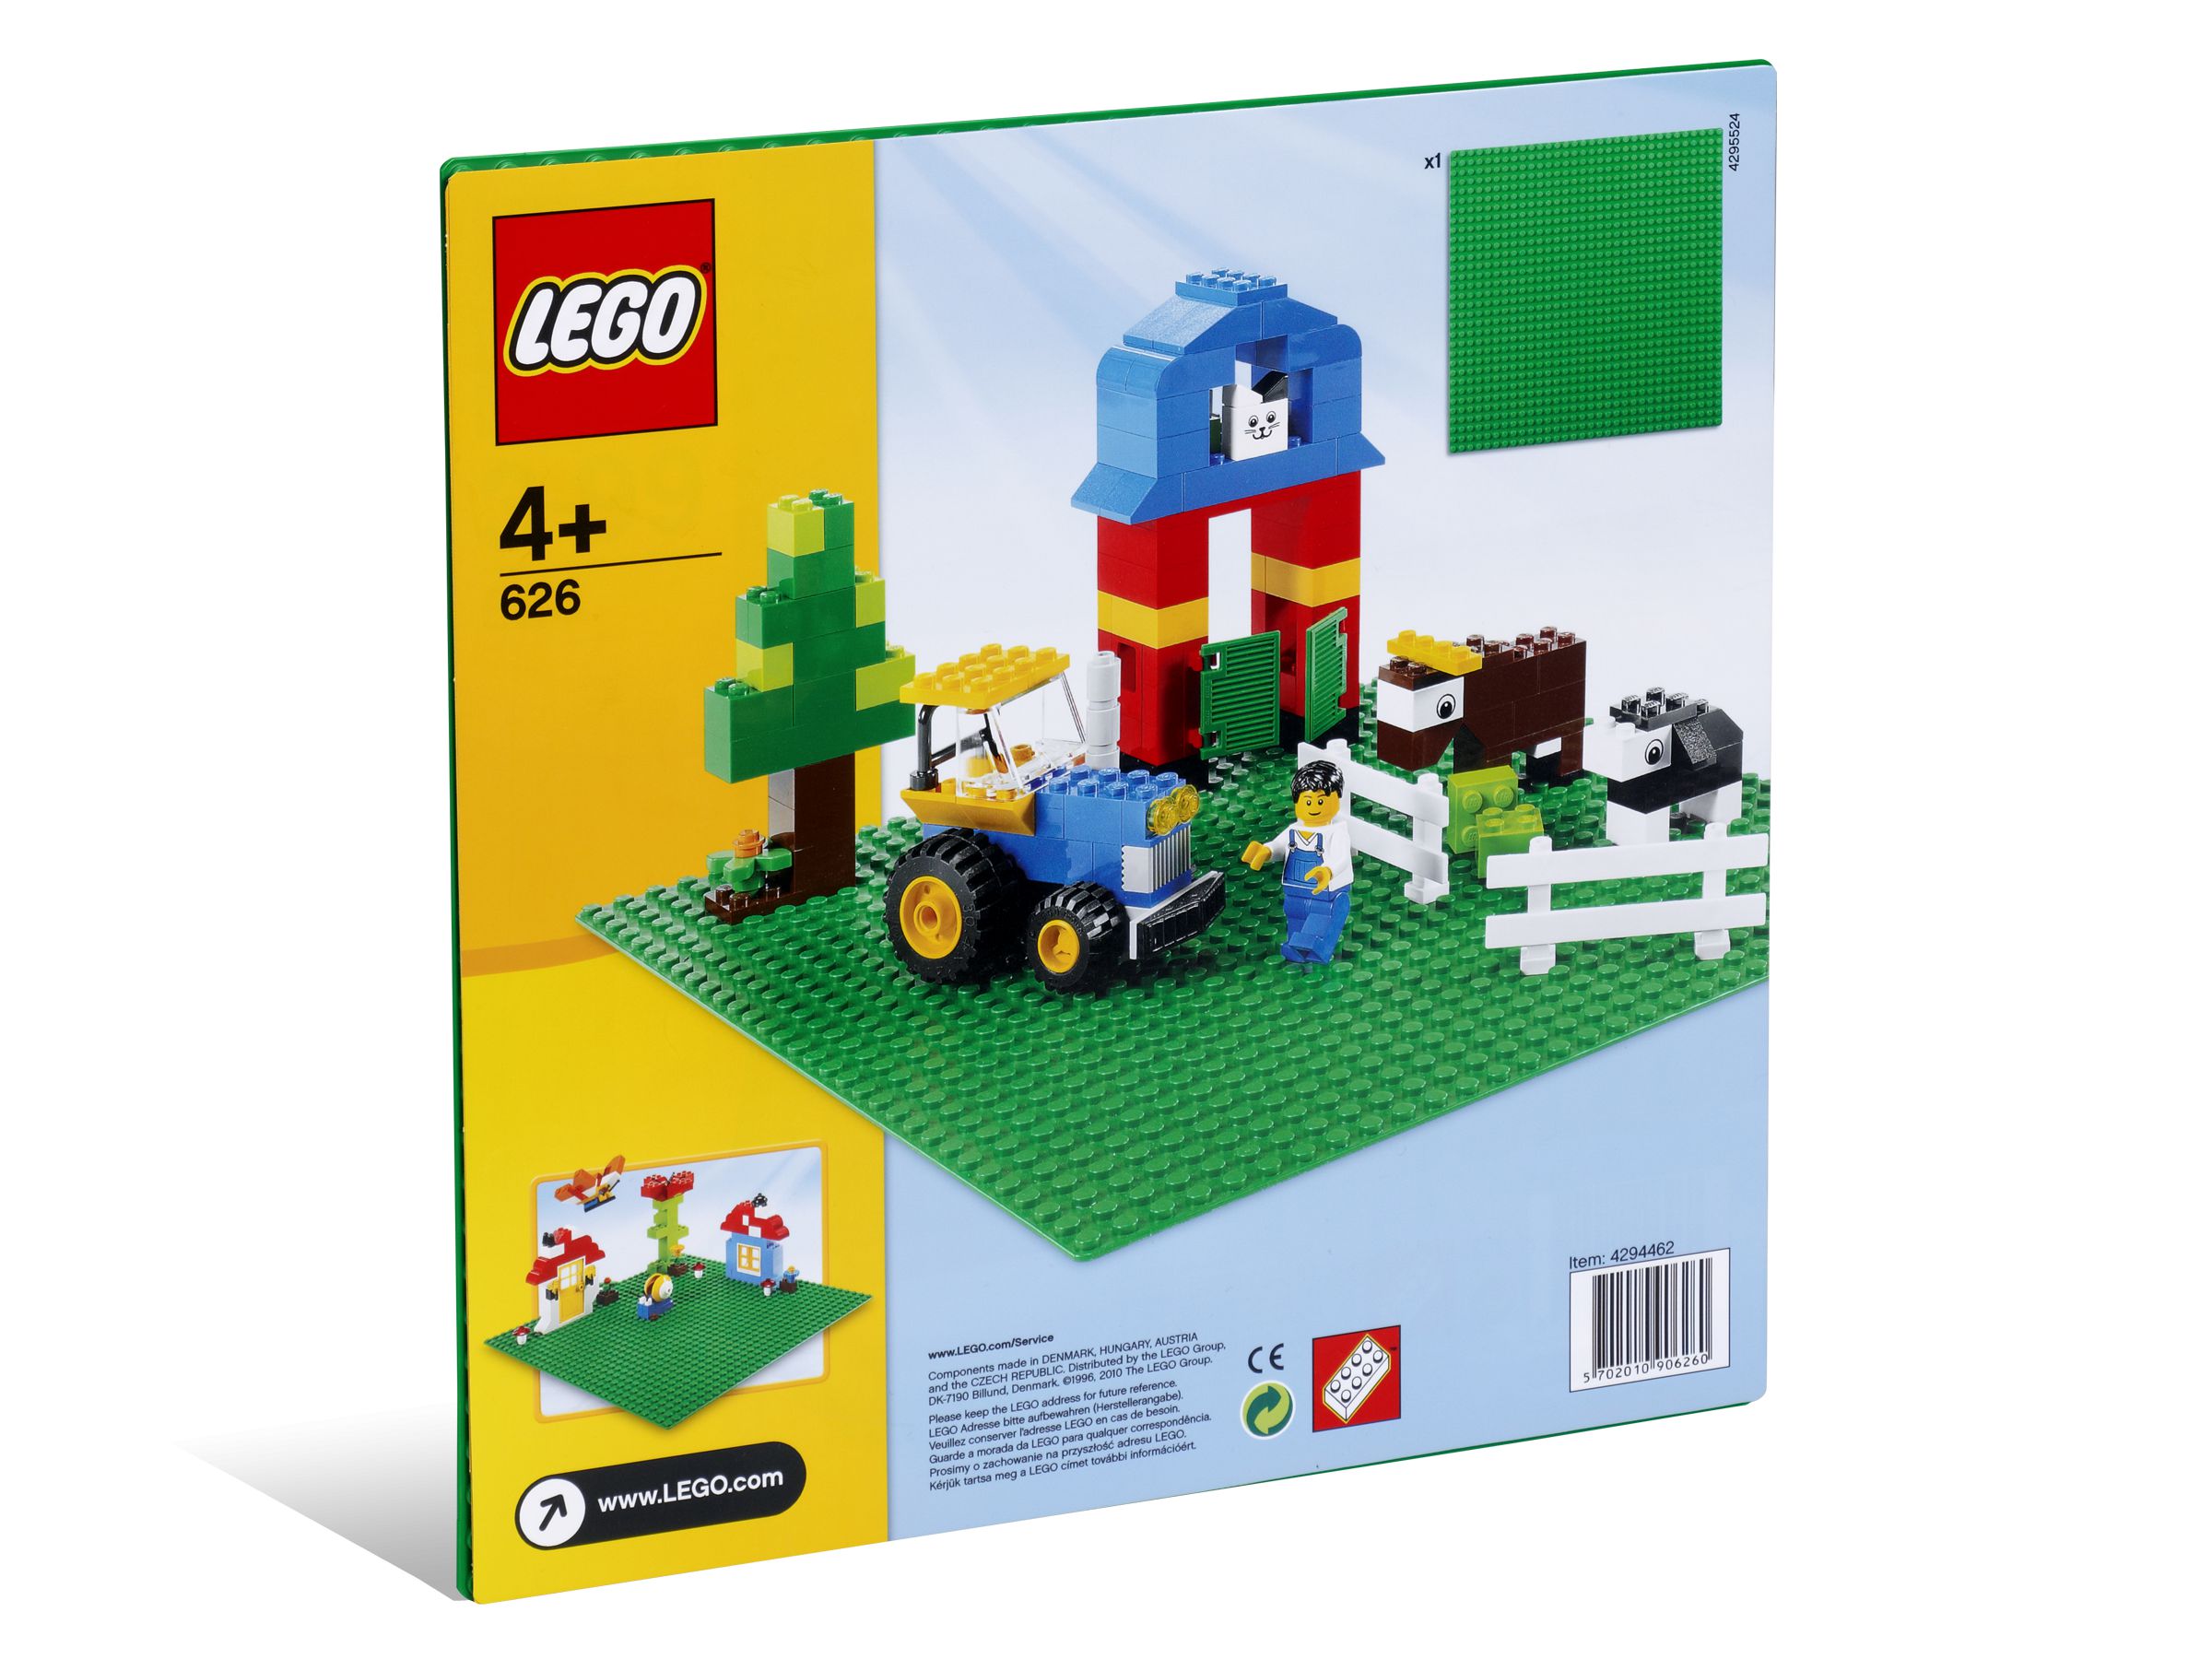 LEGO Bricks and More 626 32x32 Bauplatte Rasen LEGO_626_alt1.jpg